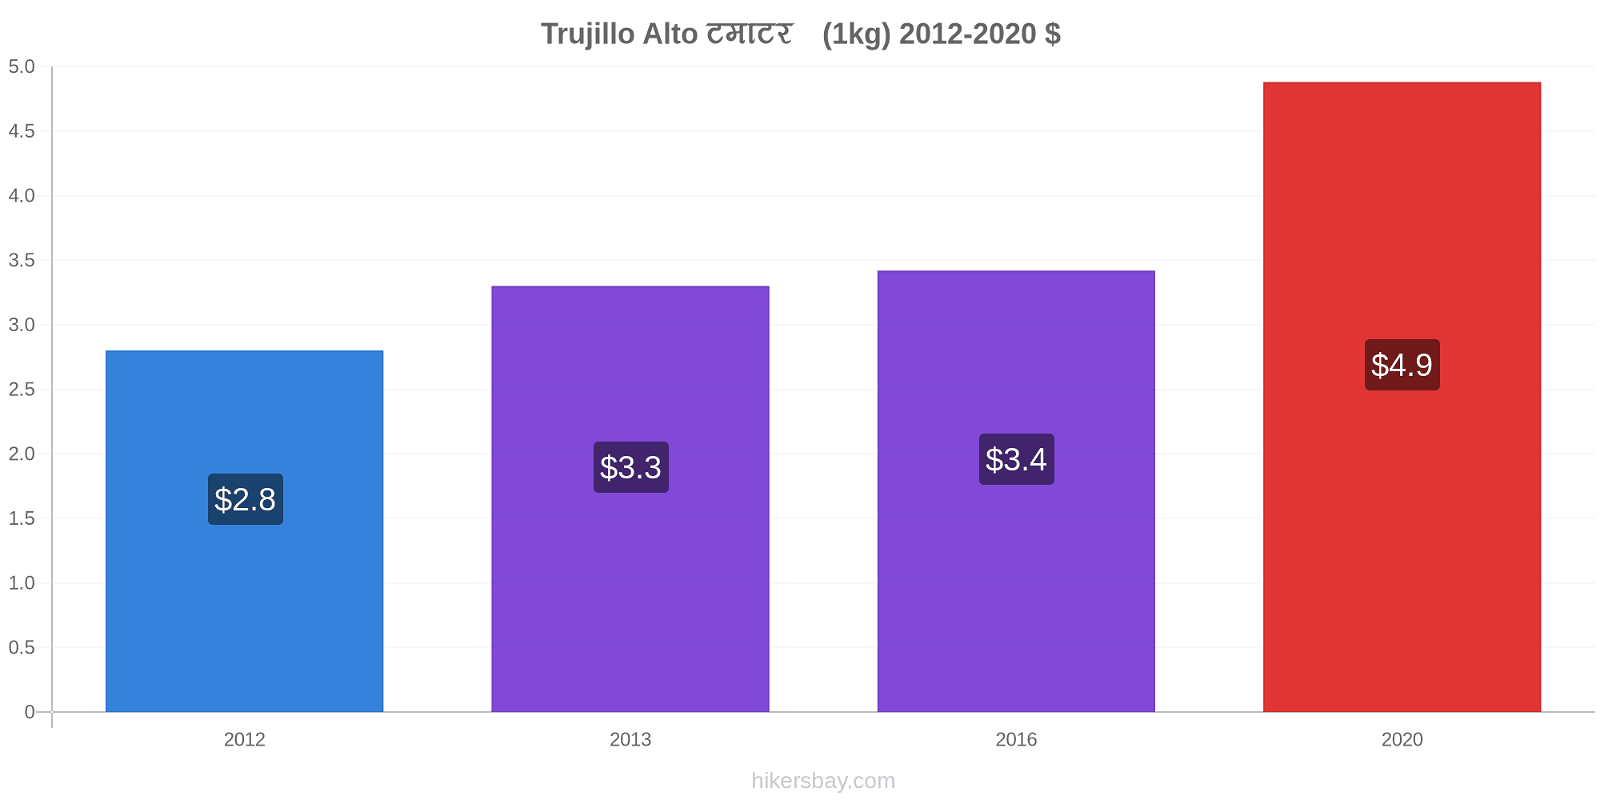 Trujillo Alto मूल्य परिवर्तन टमाटर (1kg) hikersbay.com